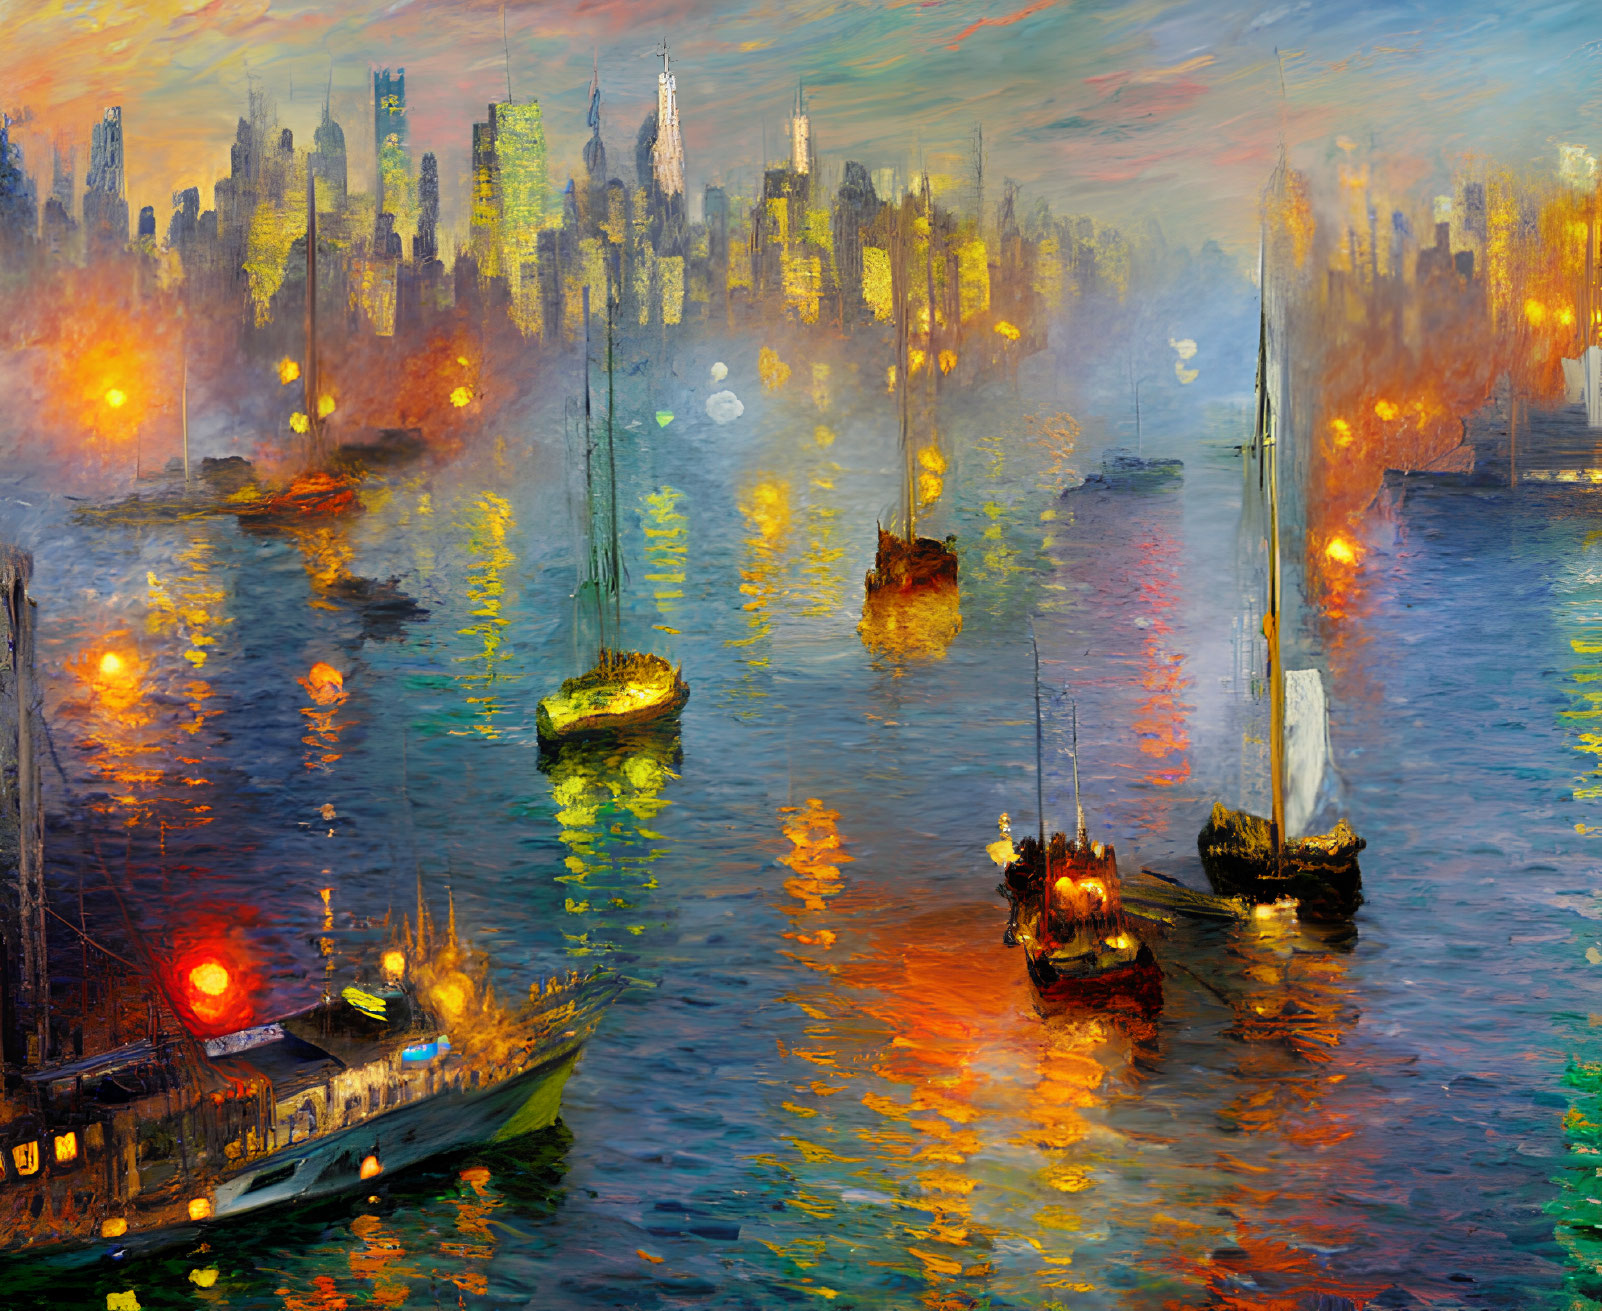 Impressionistic painting of bustling harbor at dusk